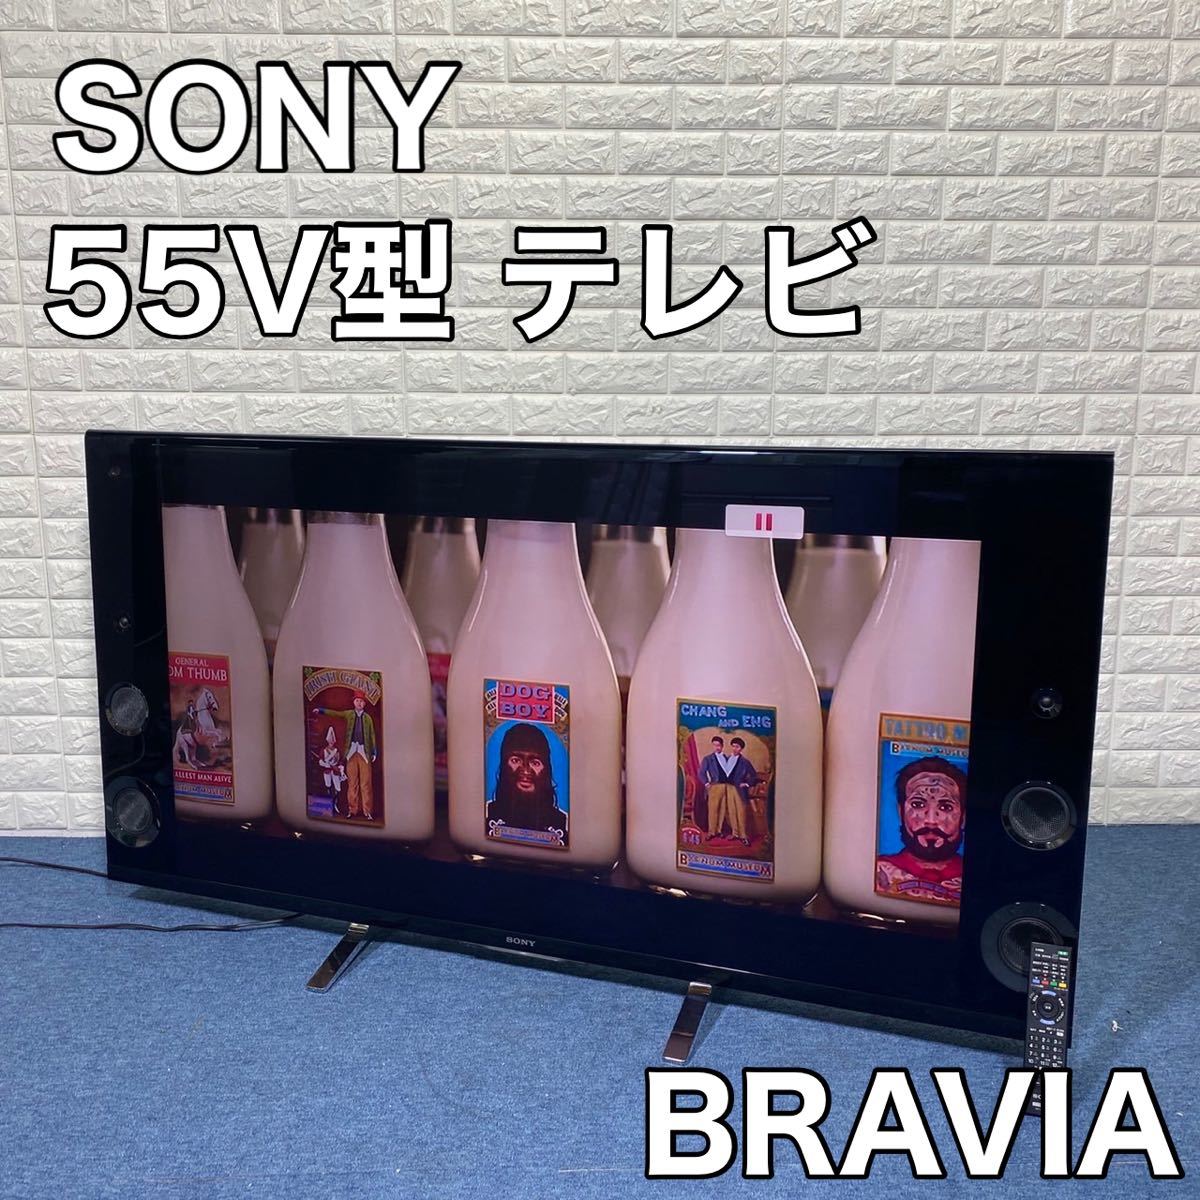 Sony ソニー Bravia ブラビア X90bシリーズ 液晶テレビ 55v型 Kd 55x90b 14年製 兵庫県発 Sucasa Com Ve